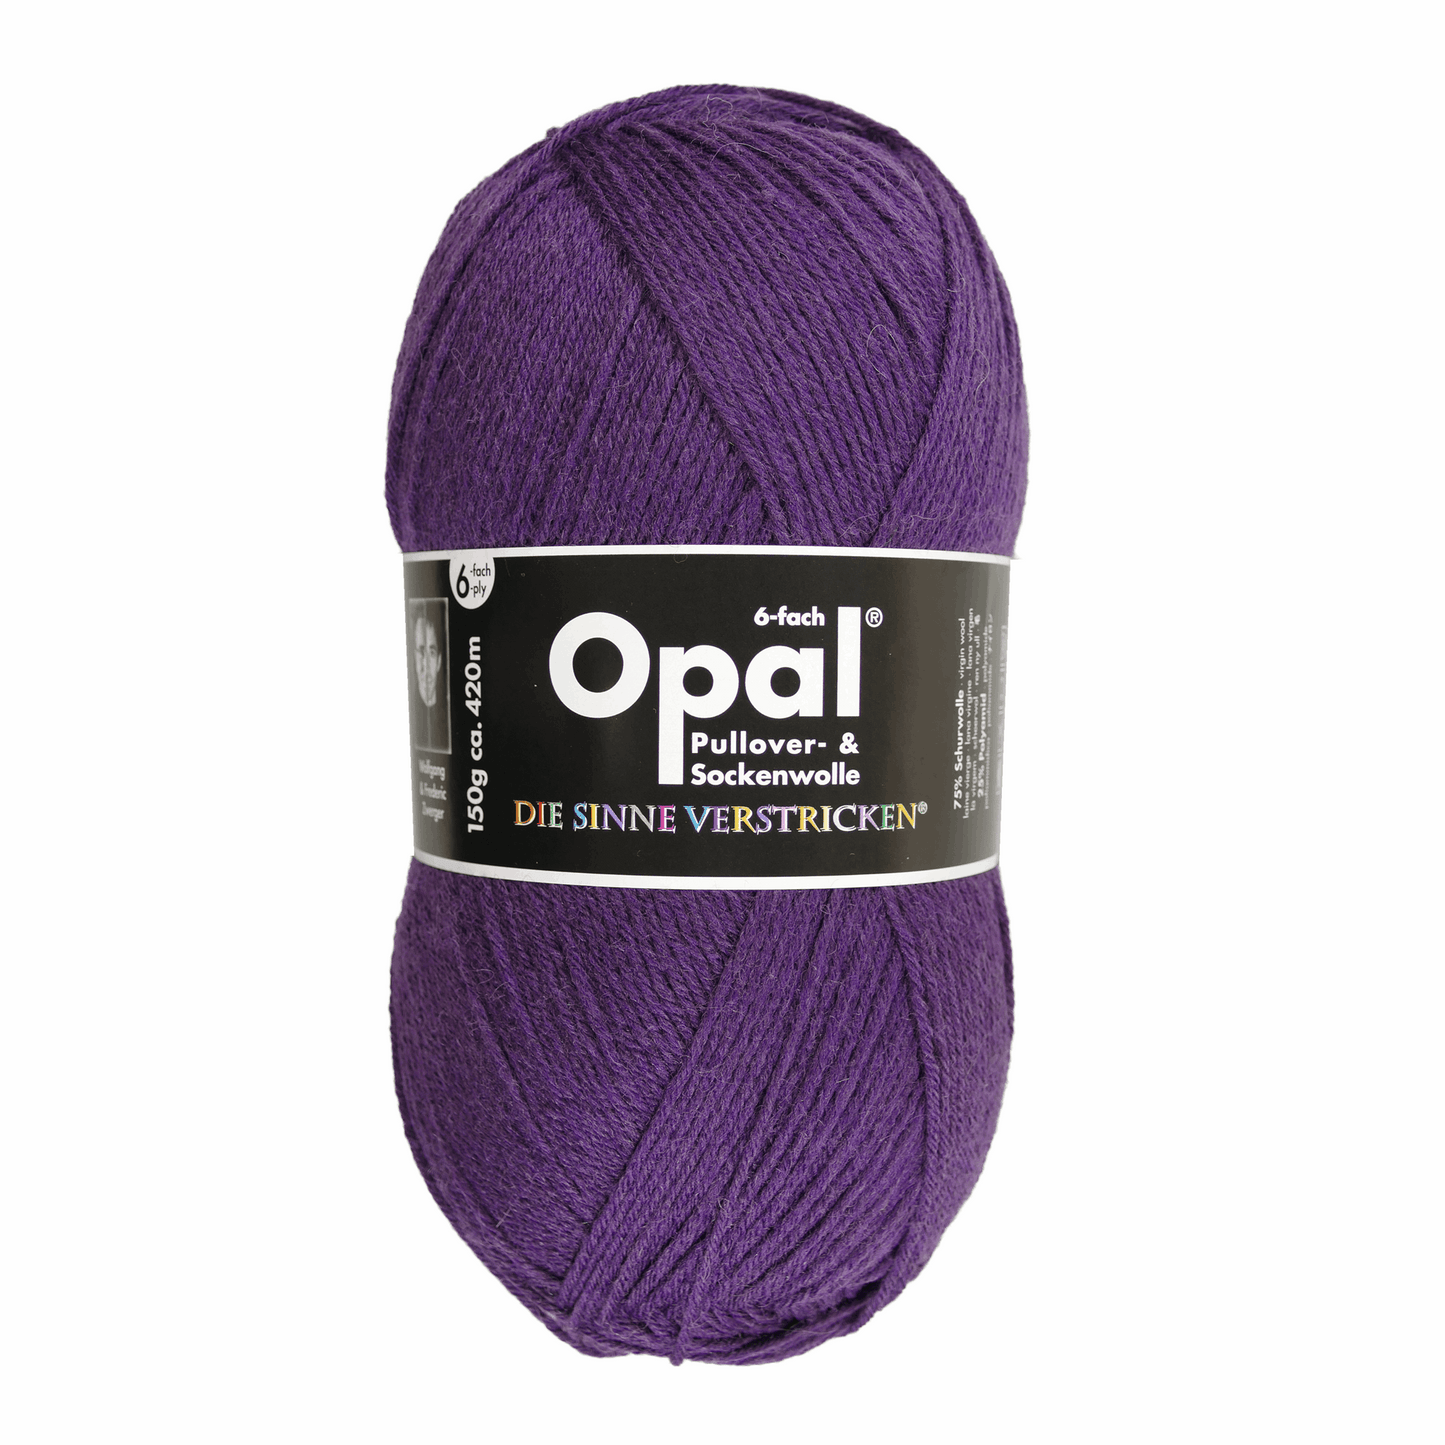 Opal uni 6-fold, 97764, color violet 7902